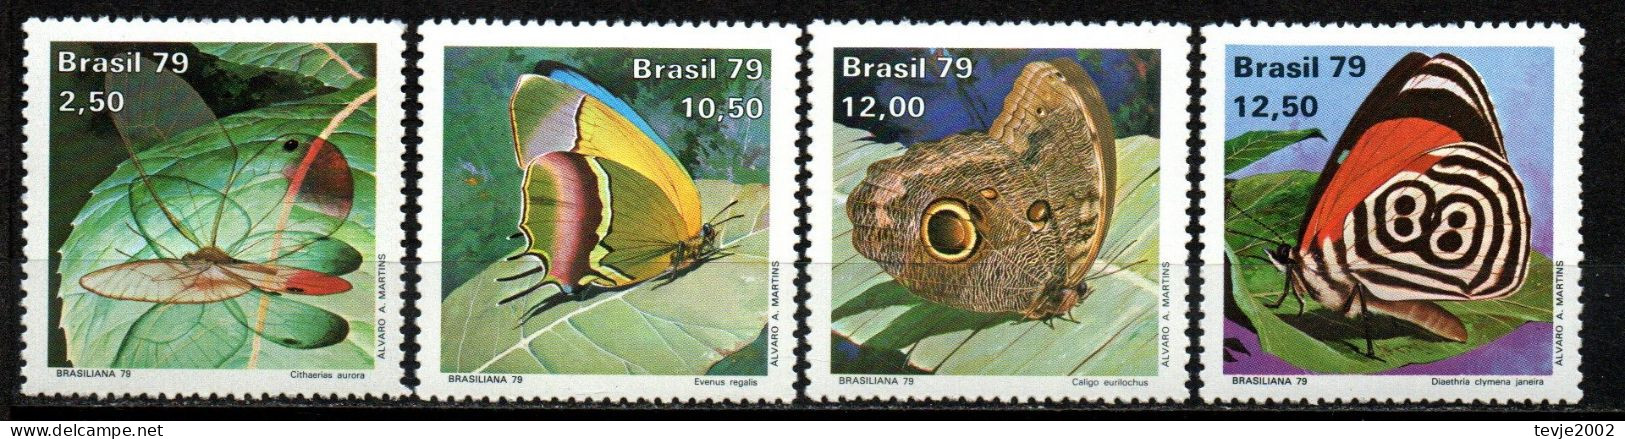 Brasilien 1979 - Mi.Nr. 1716 - 1719 - Postfrisch MNH - Tiere Animals Schmetterlinge Butterflies - Papillons